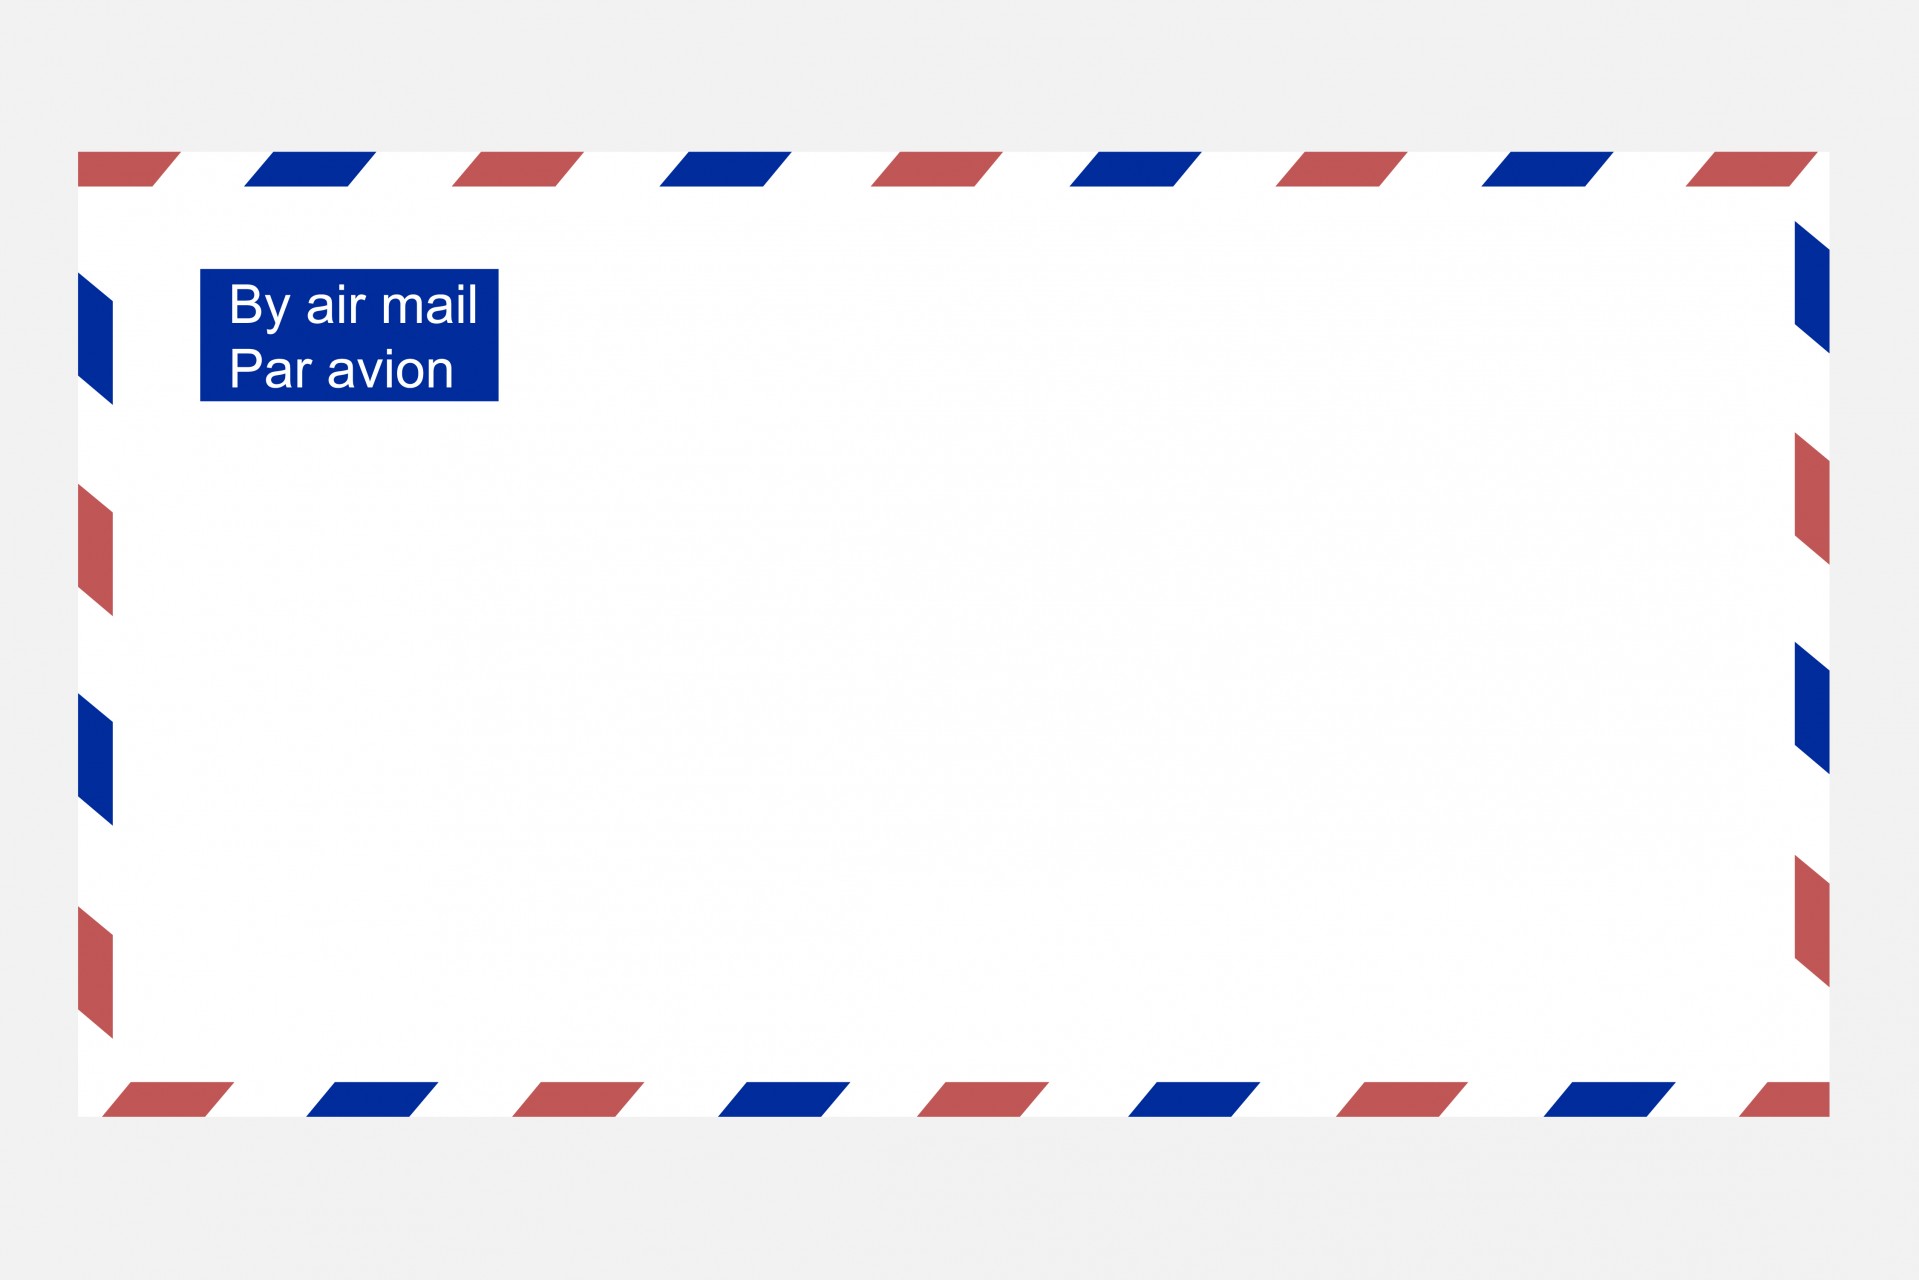 airmail-1929-fhvn-airport-full-env-jpg-1400-760-airmail-envelopes